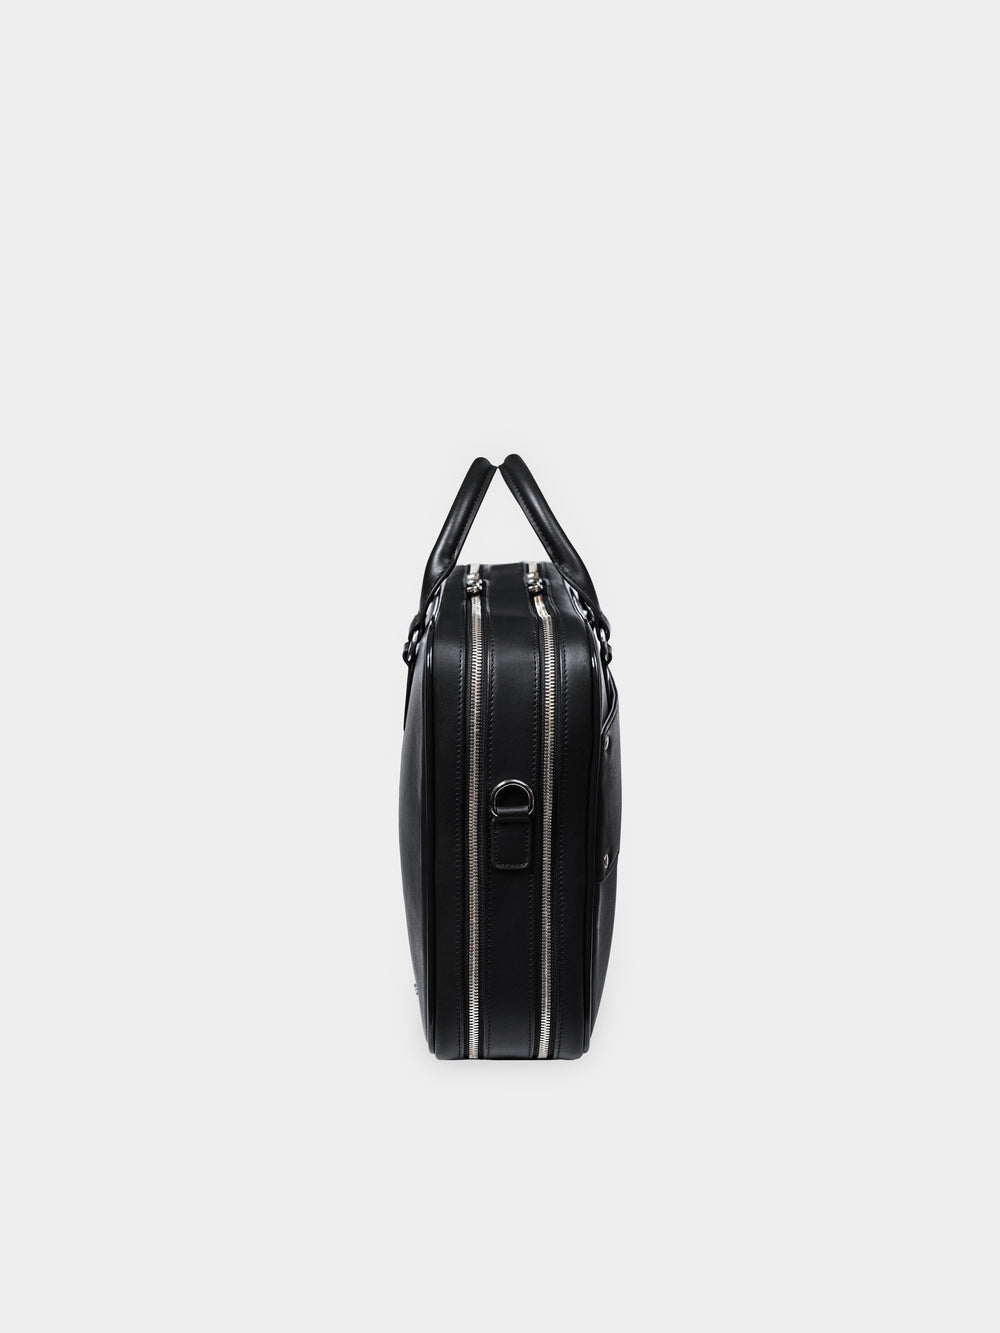 Louis Vuitton Black Backpacks, Bags & Briefcases for Men